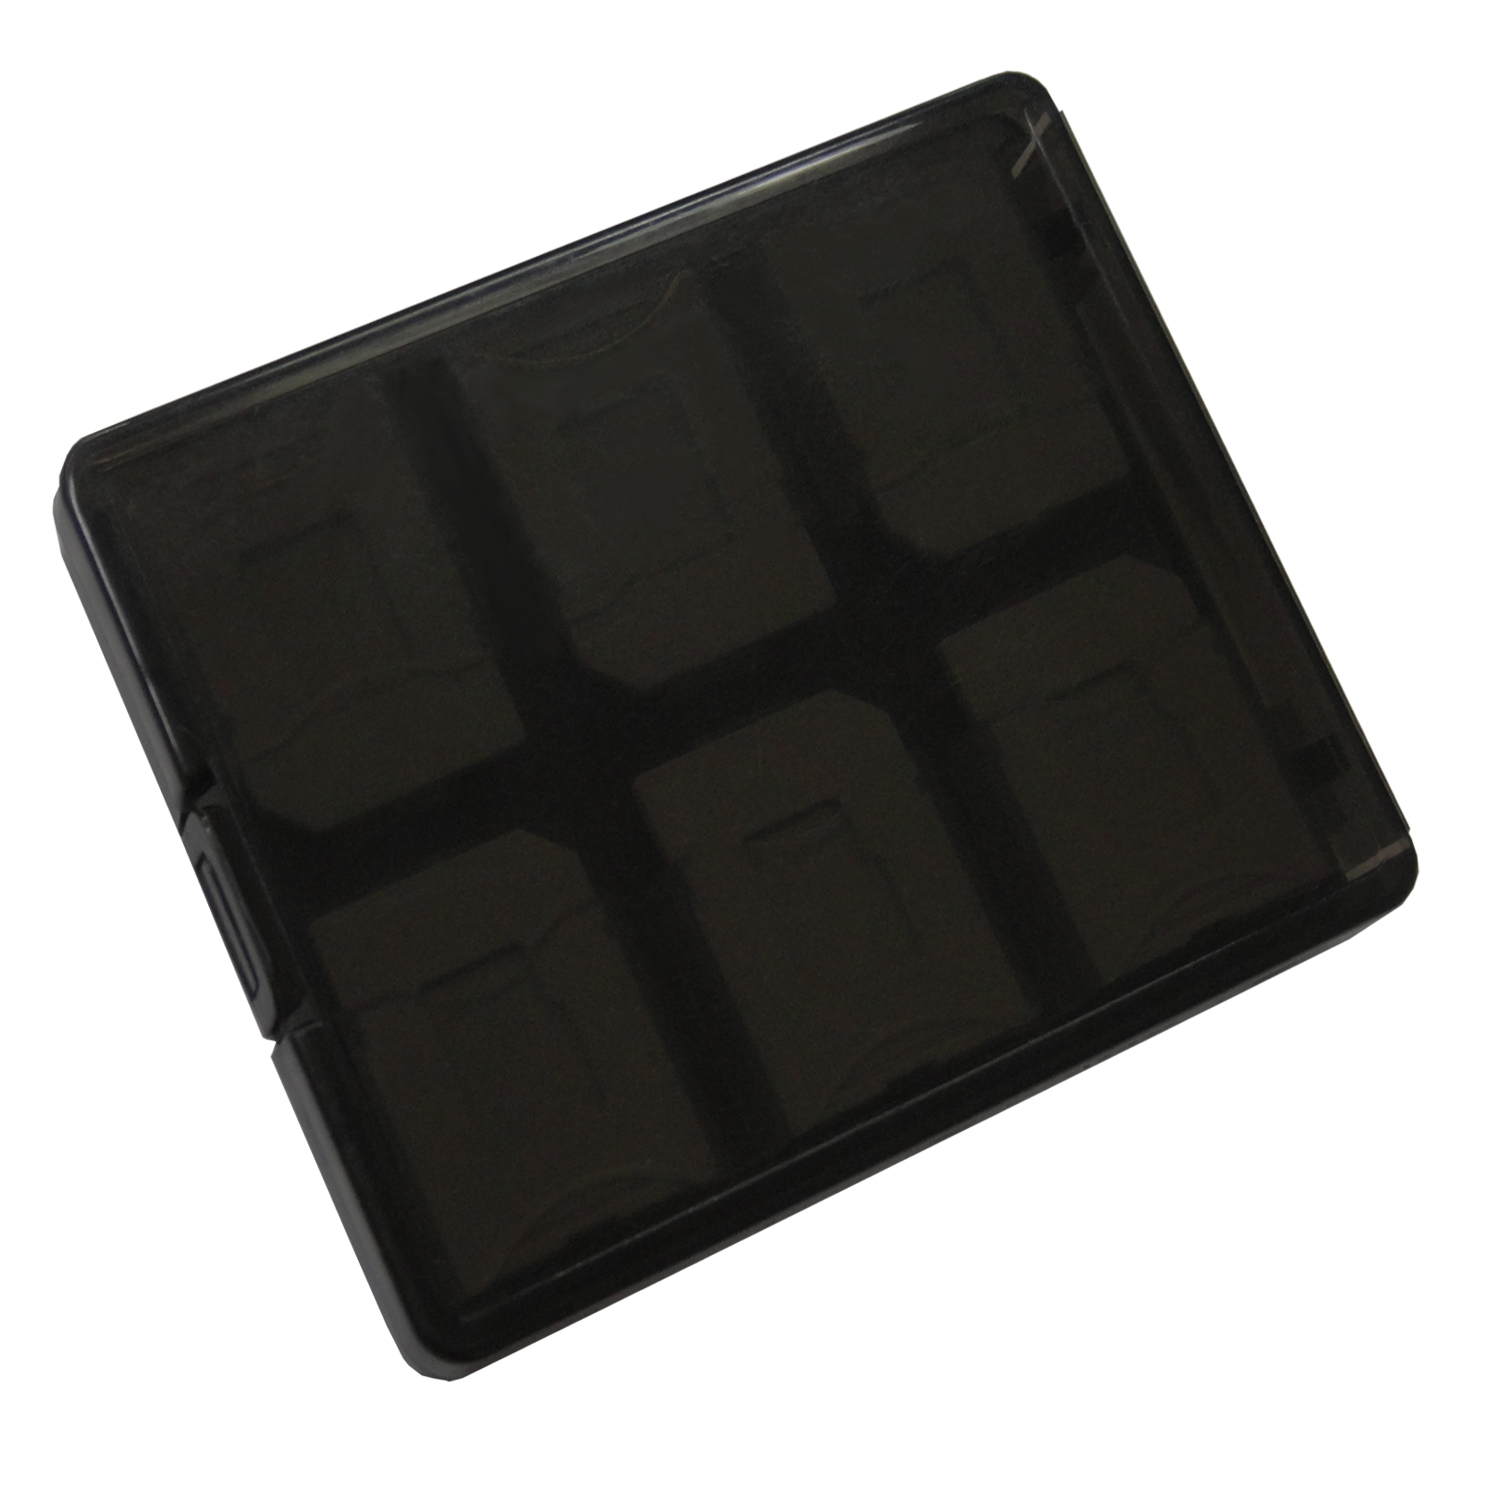 SD/microSD メモリーカード収納ケース 12枚収納用